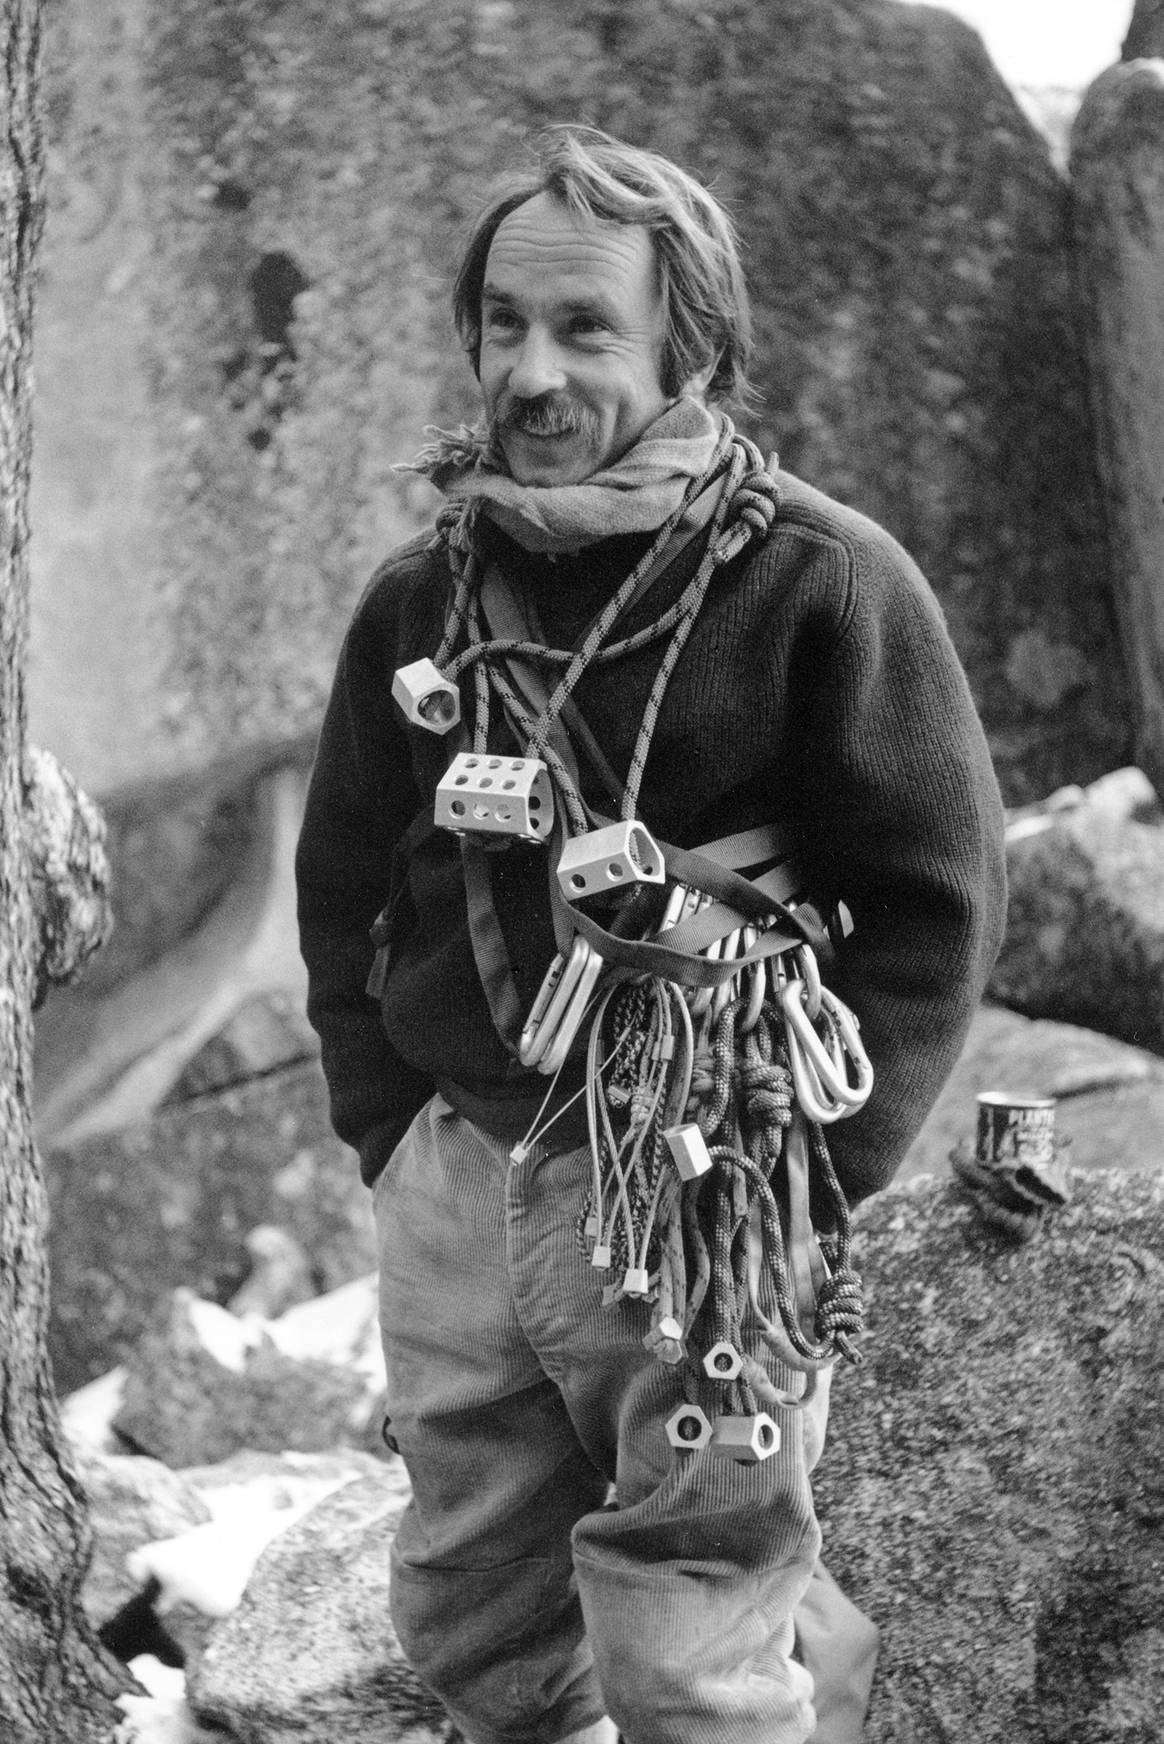 Yvon Chouinard, de joven. Imagen a través de Patagonia